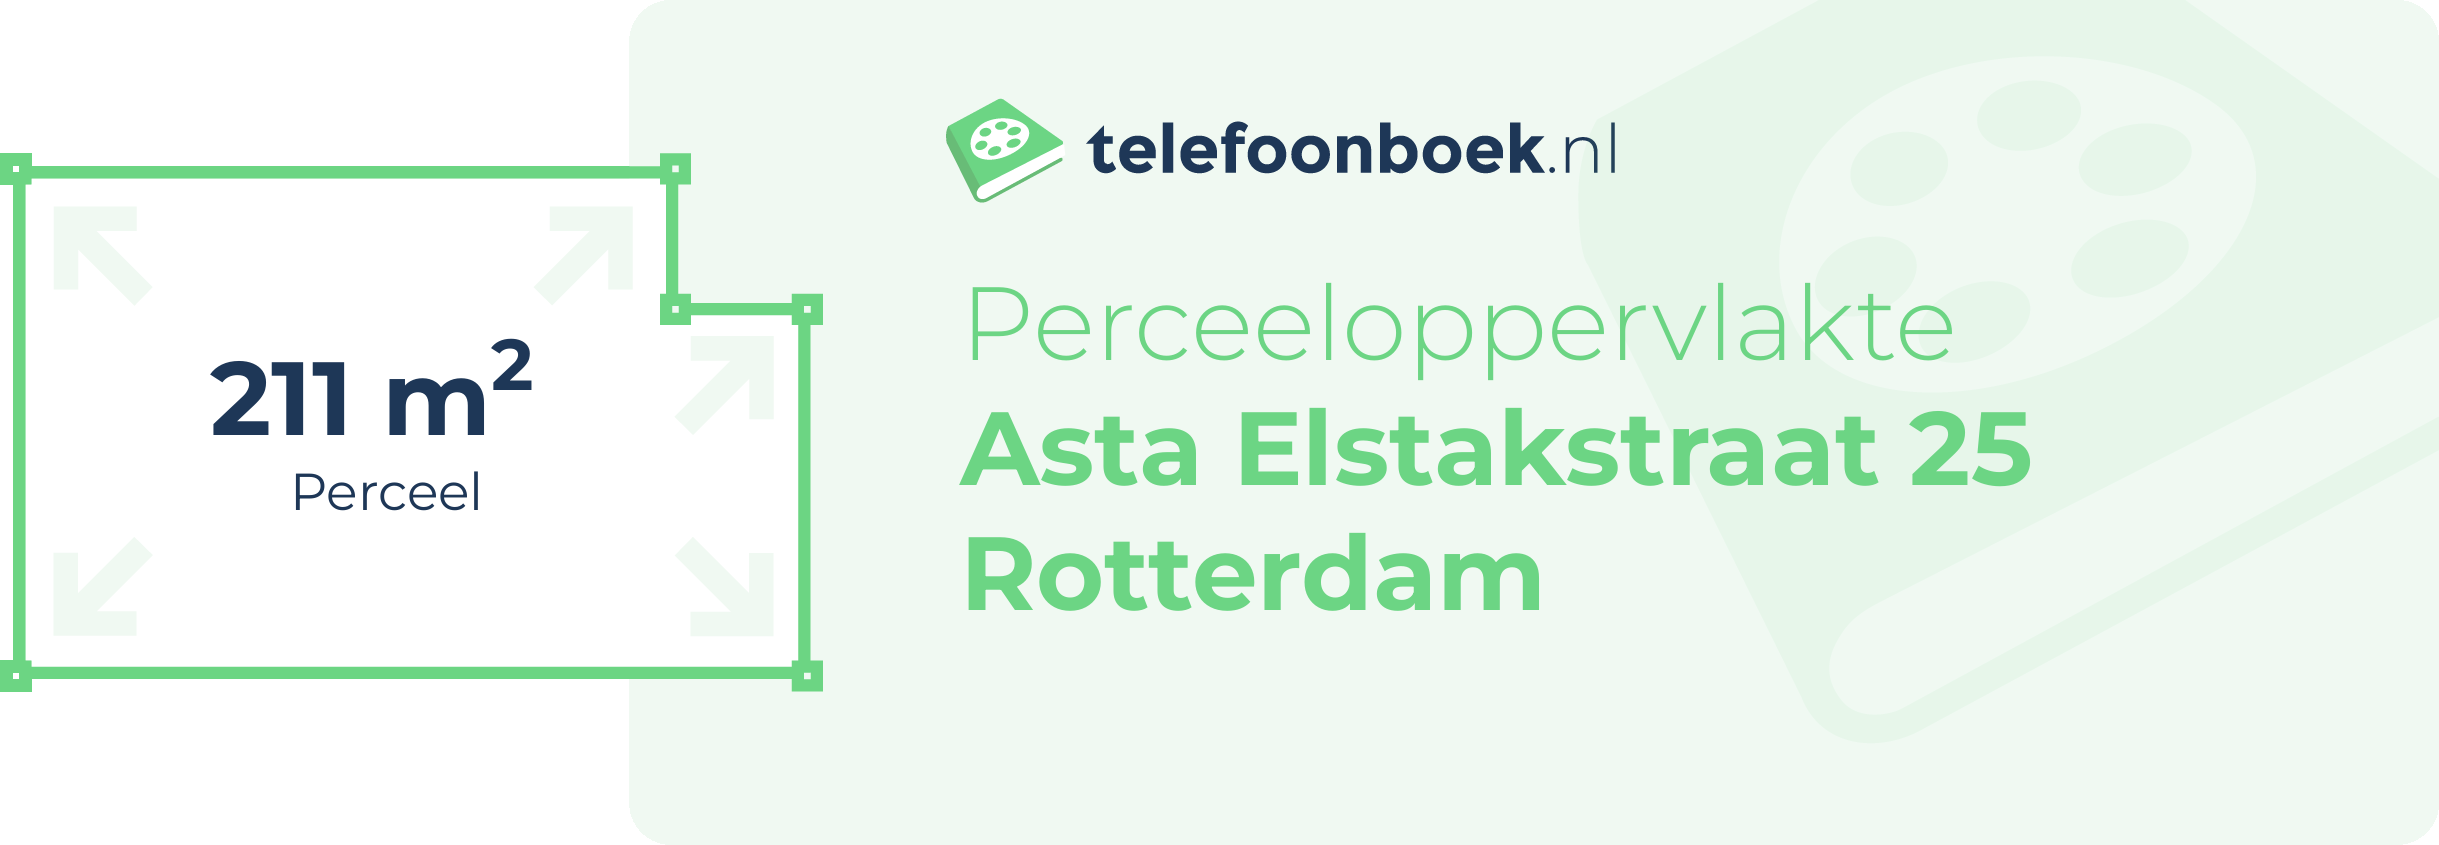 Perceeloppervlakte Asta Elstakstraat 25 Rotterdam